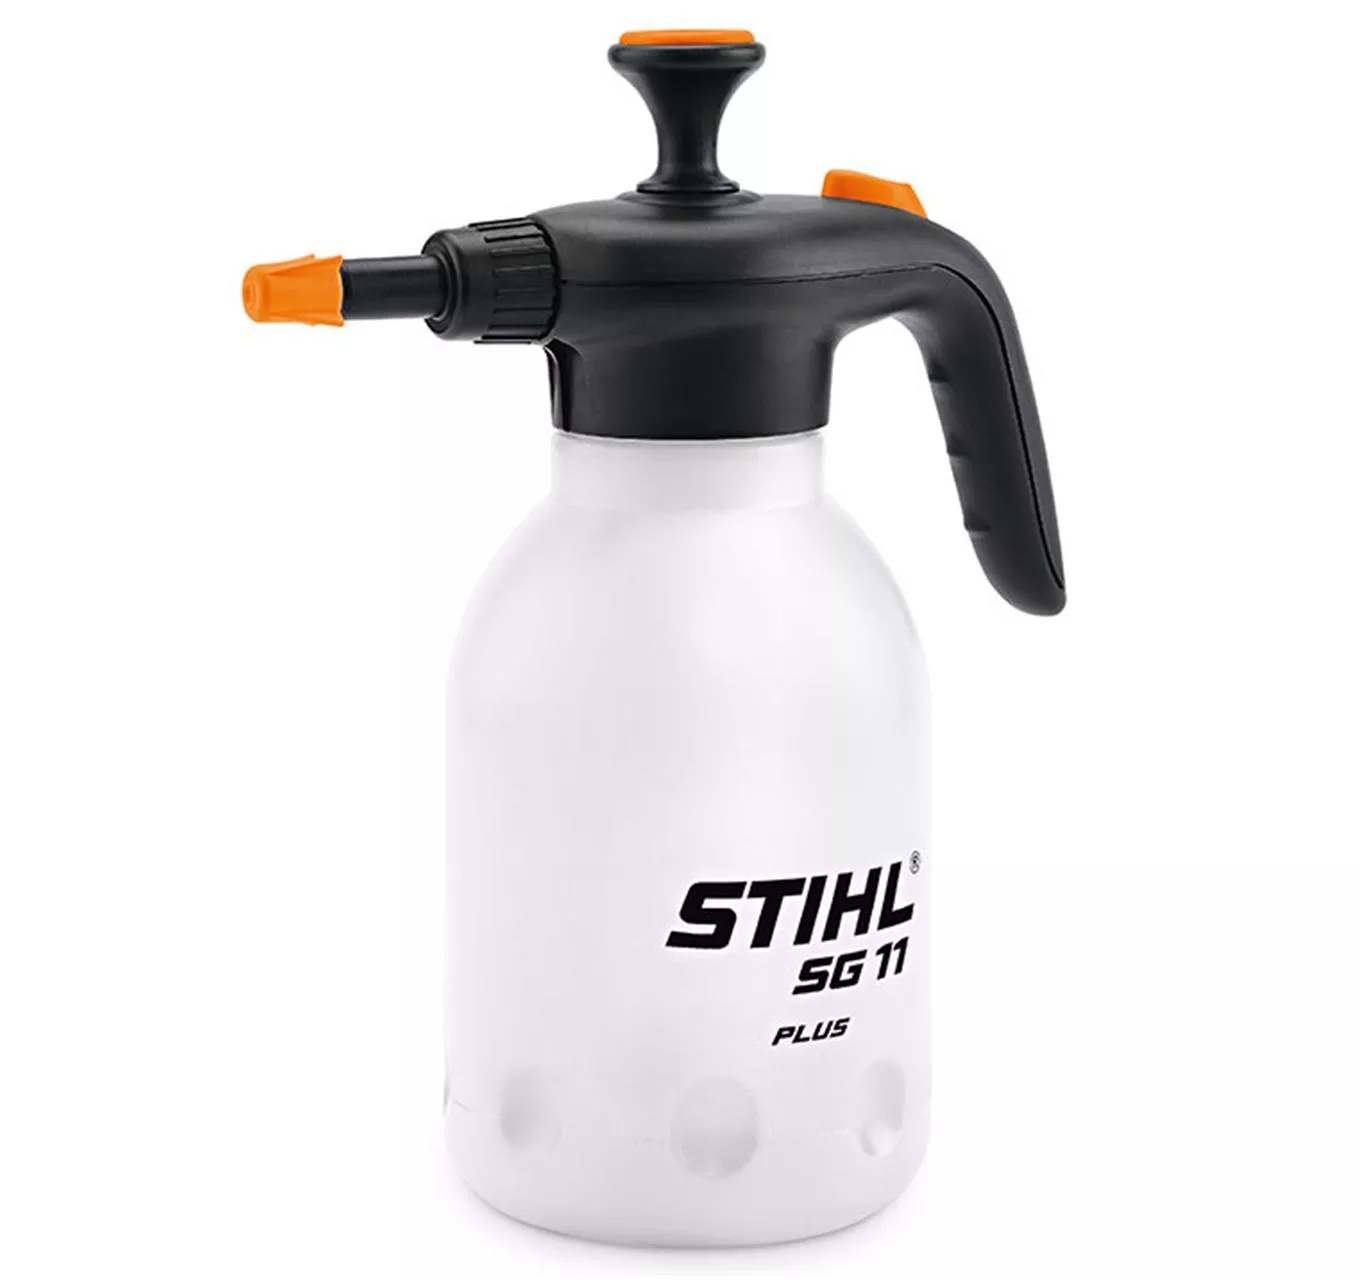 SG 11 PLUS Hand Sprayer 1.5L